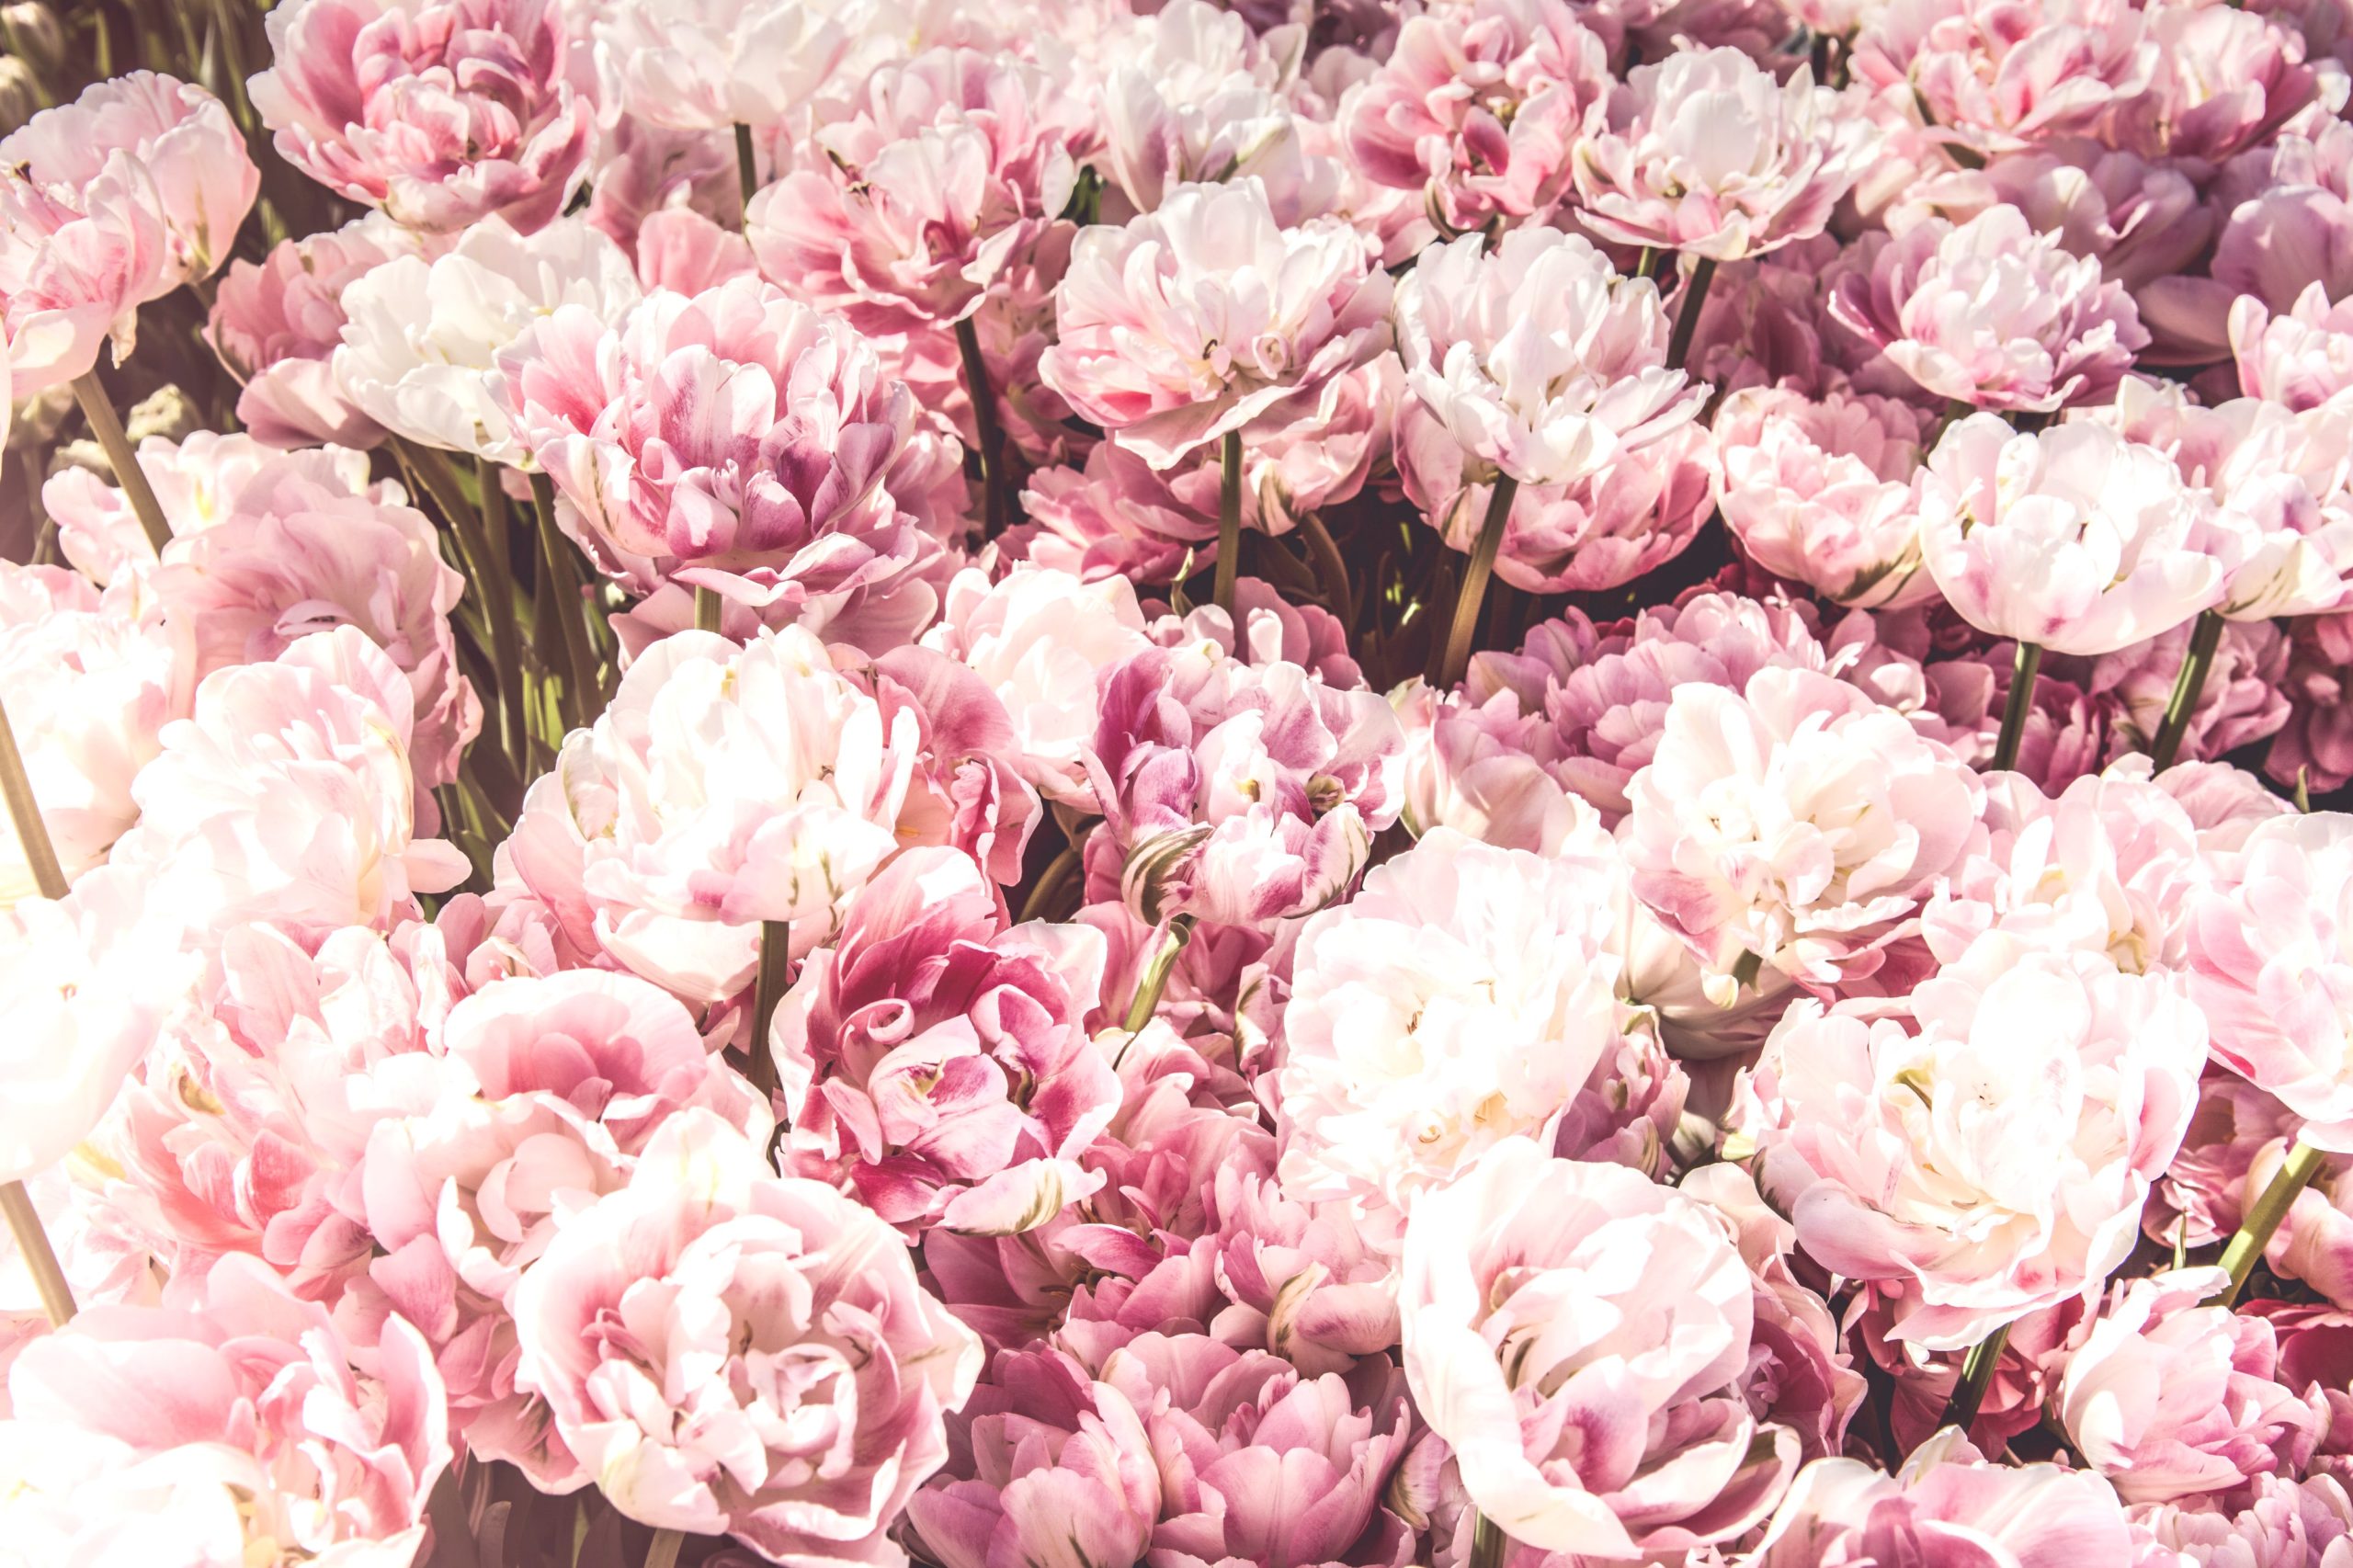 <img src="pink.jpg" alt="pink flowers collection"/> 